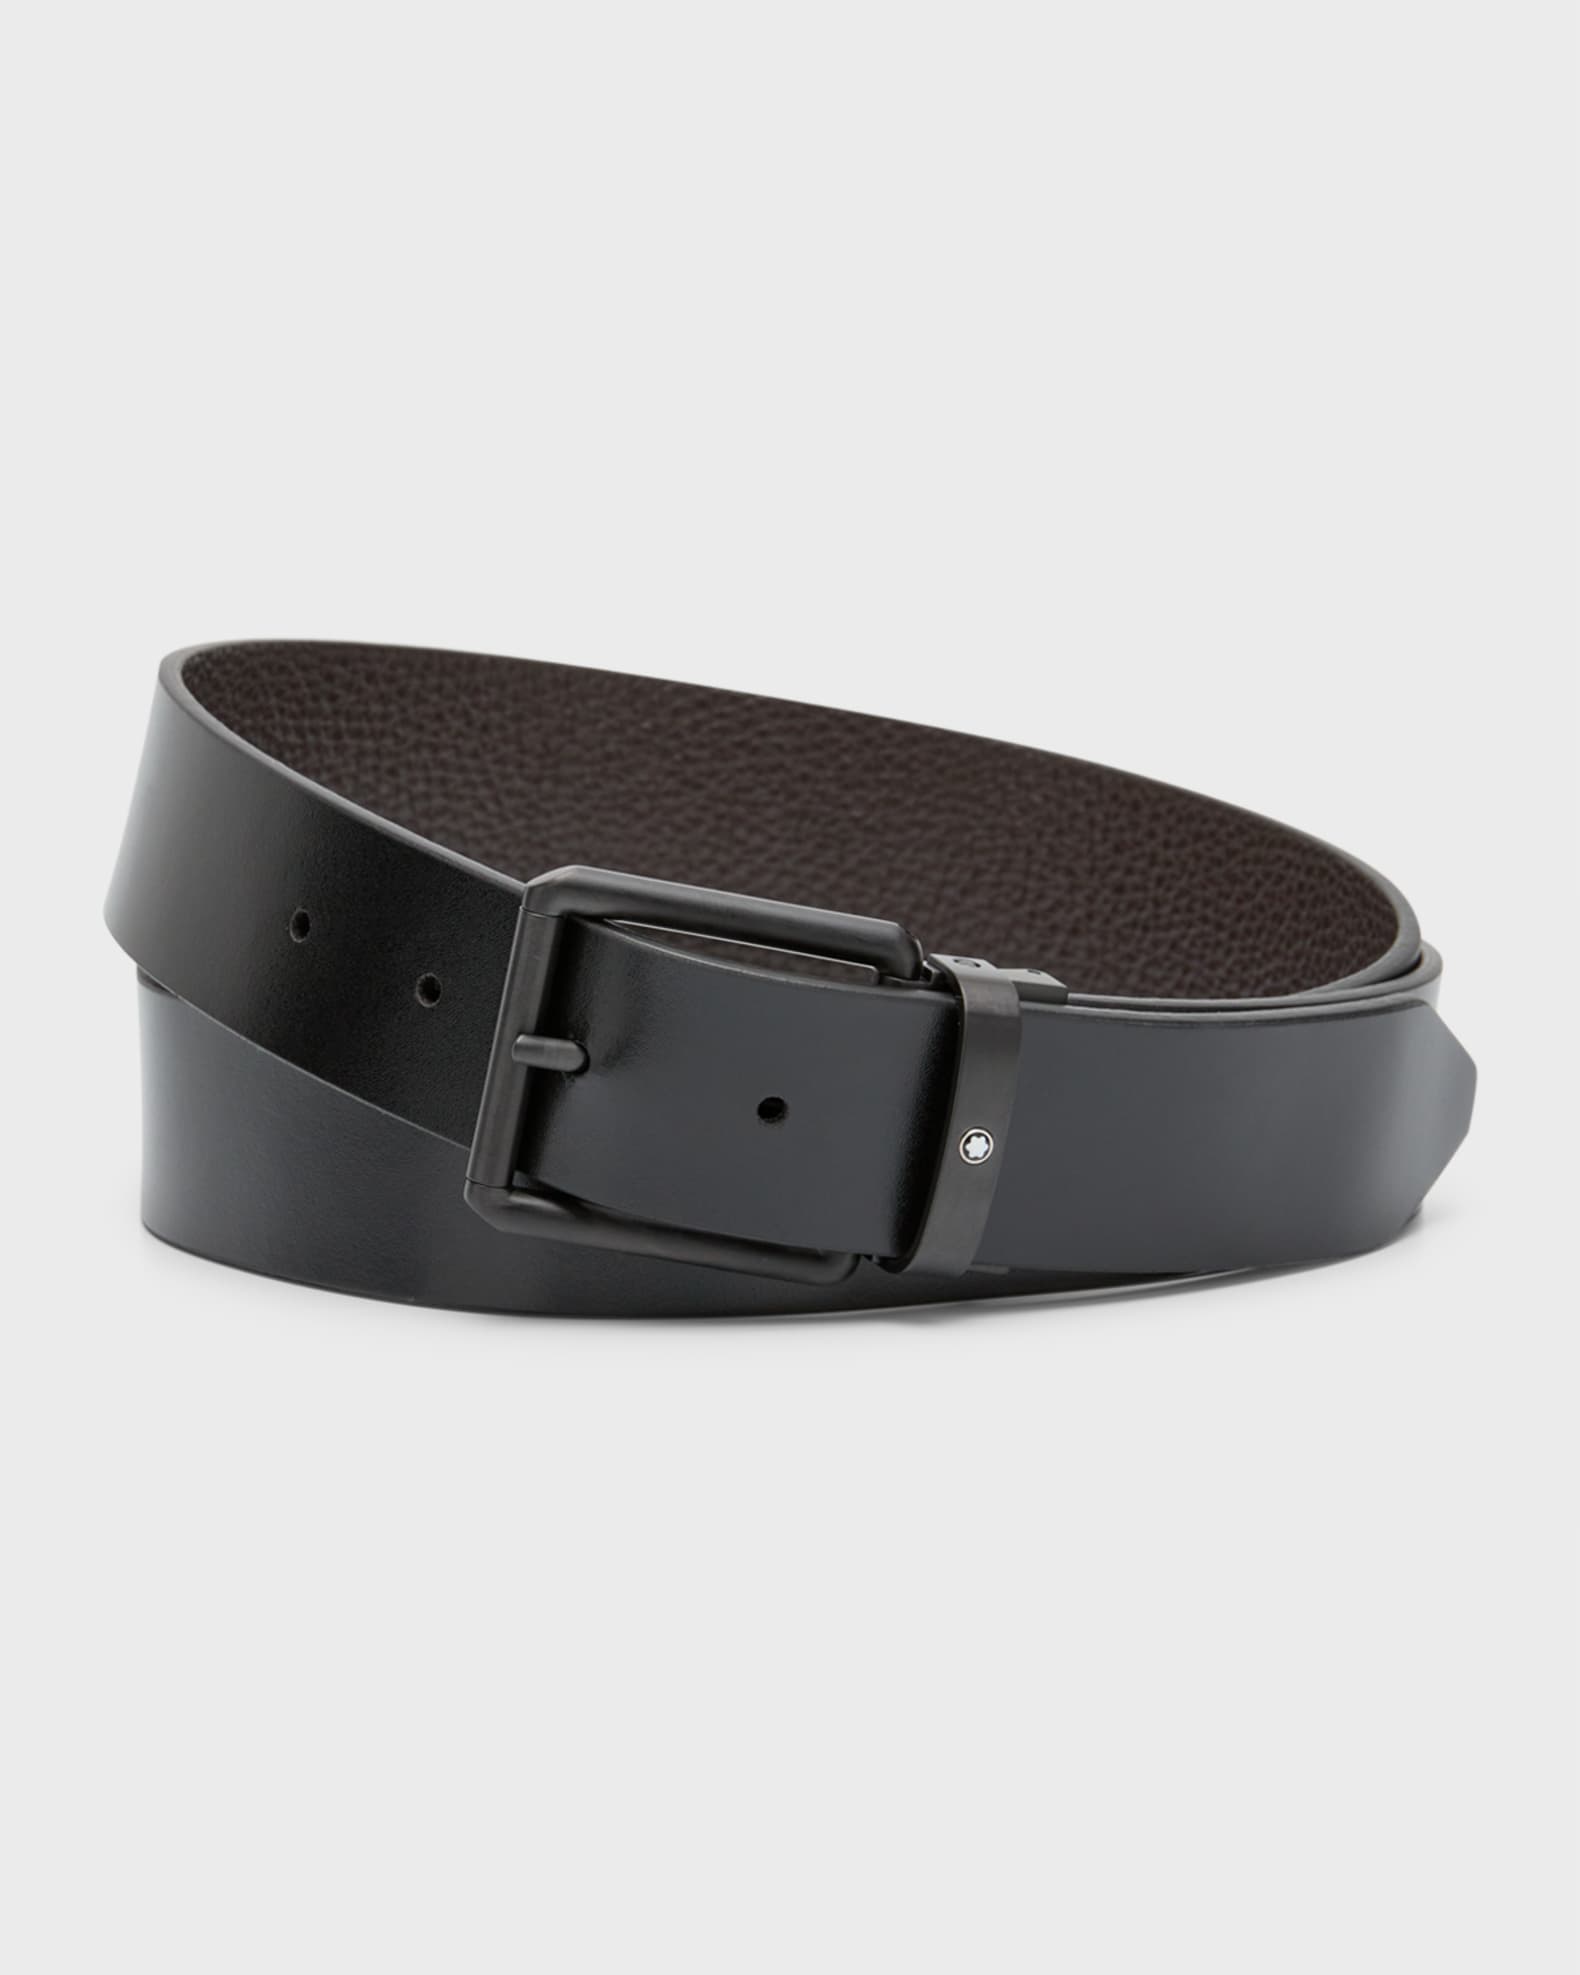 Ferragamo, Grained leather 35mm reversible belt